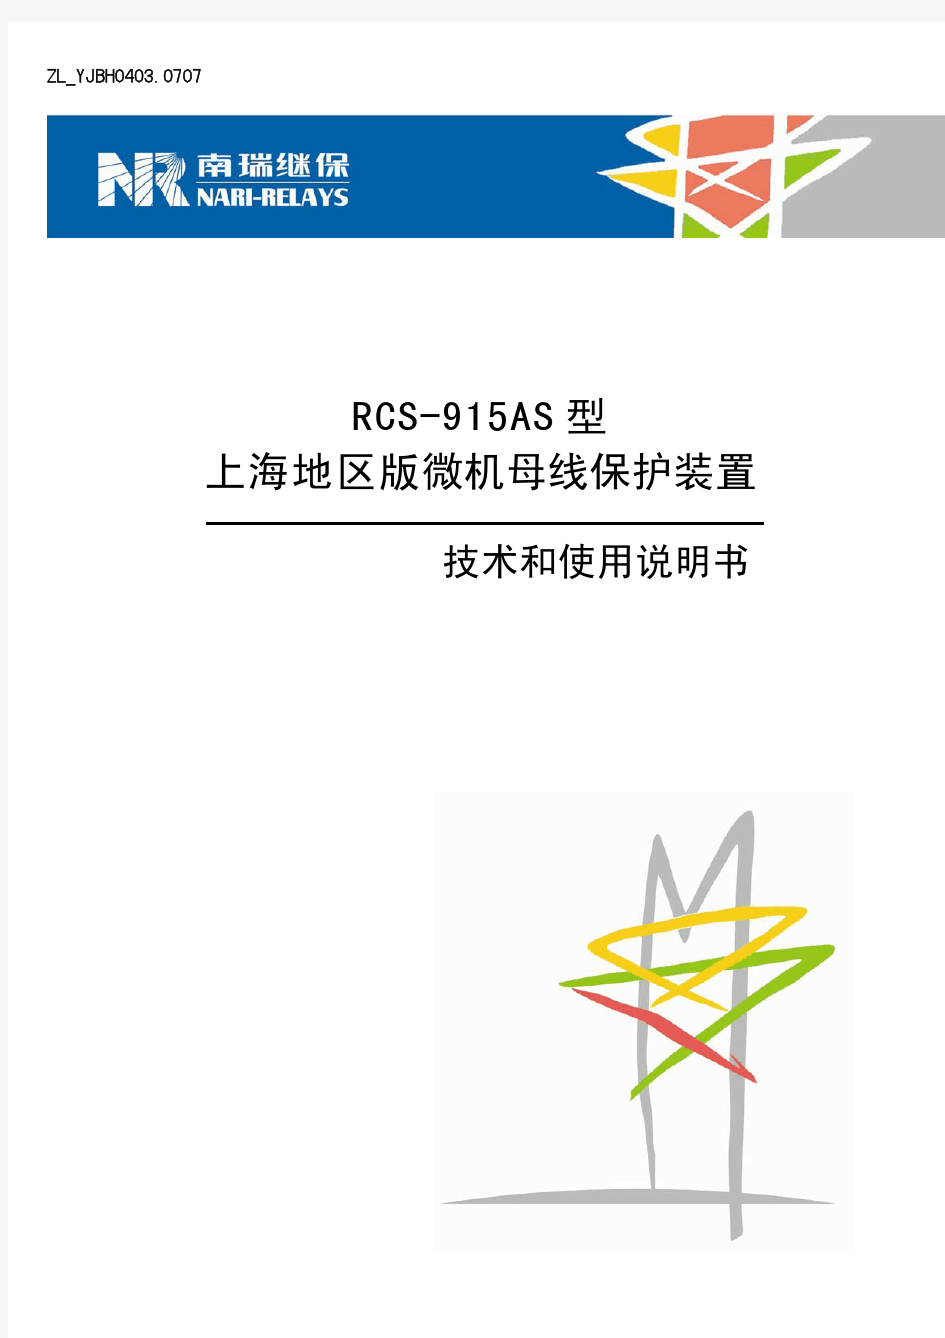 RCS-915AS型上海地区版微机母线保护装置技术和使用说明书